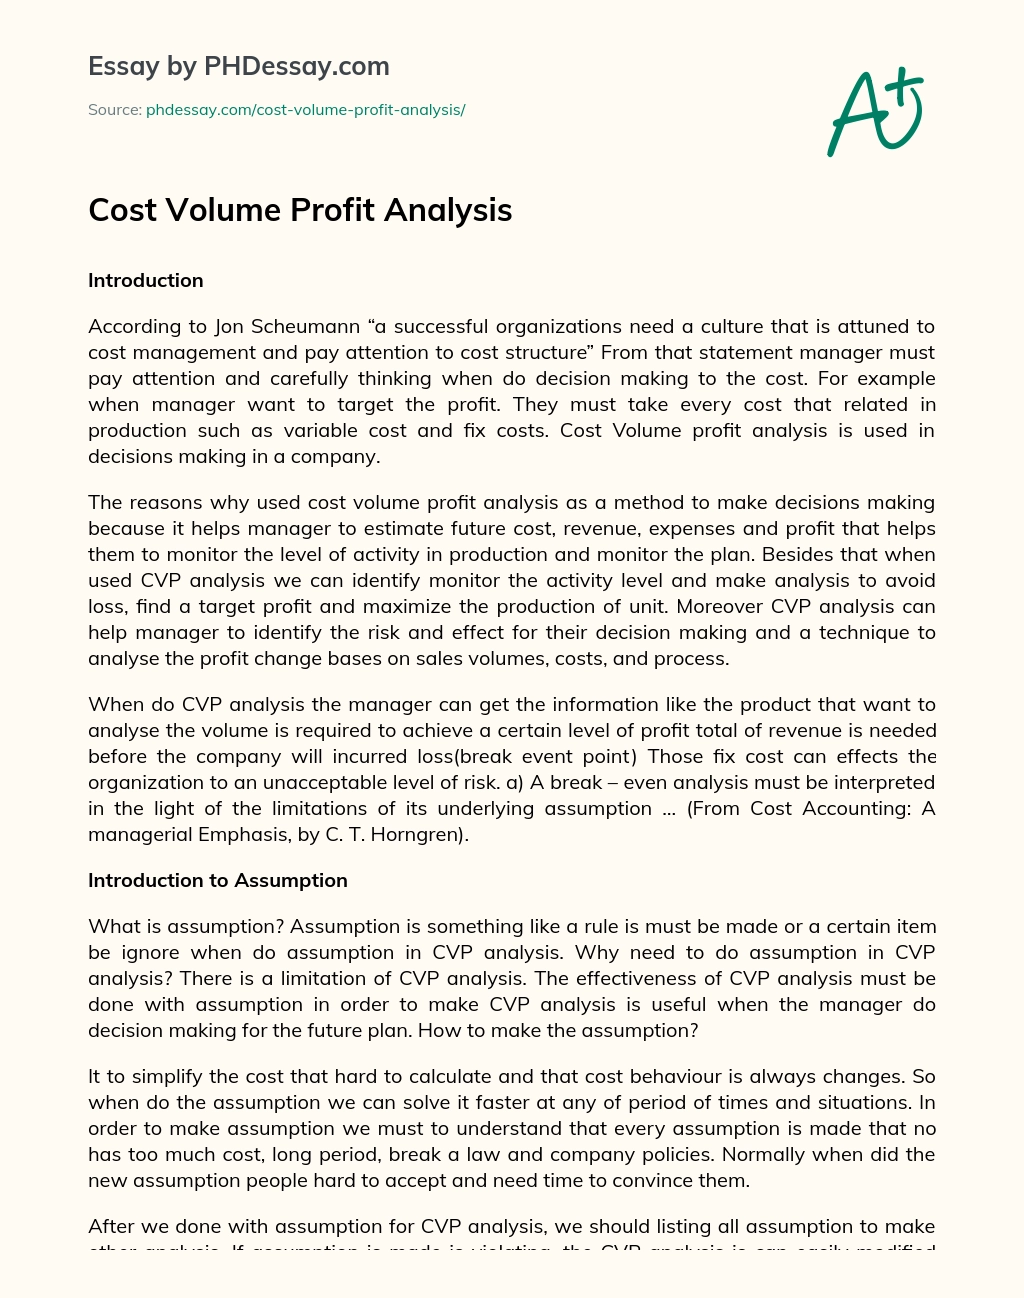 Cost Volume Profit Analysis essay